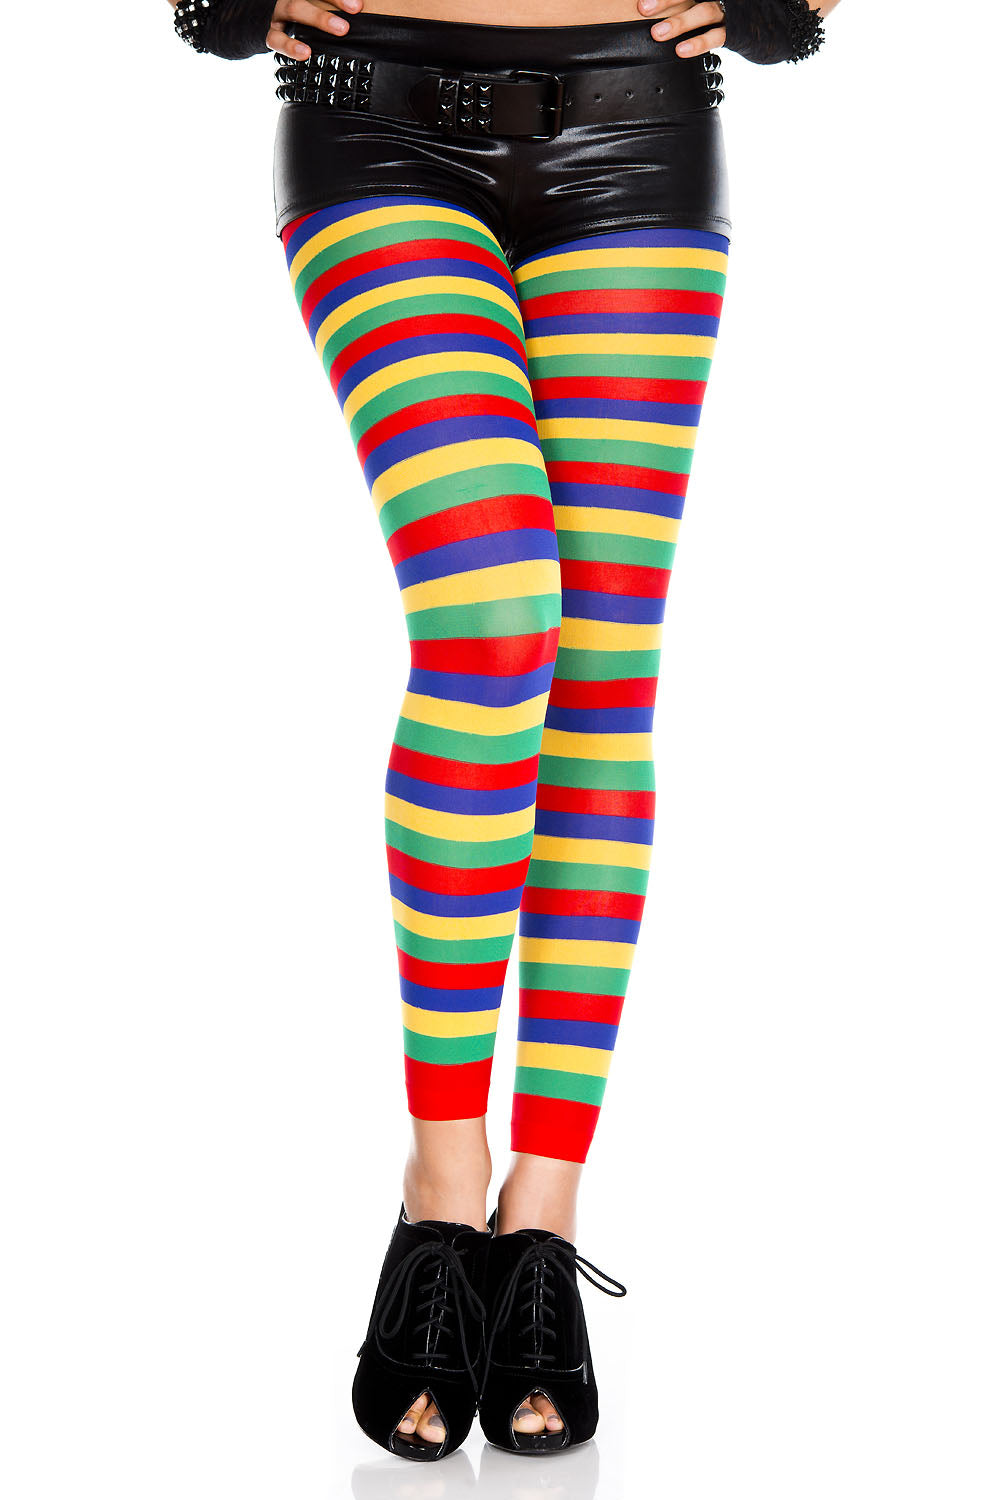 Vertical Stripes, Footless Nylon Tights or Leggings